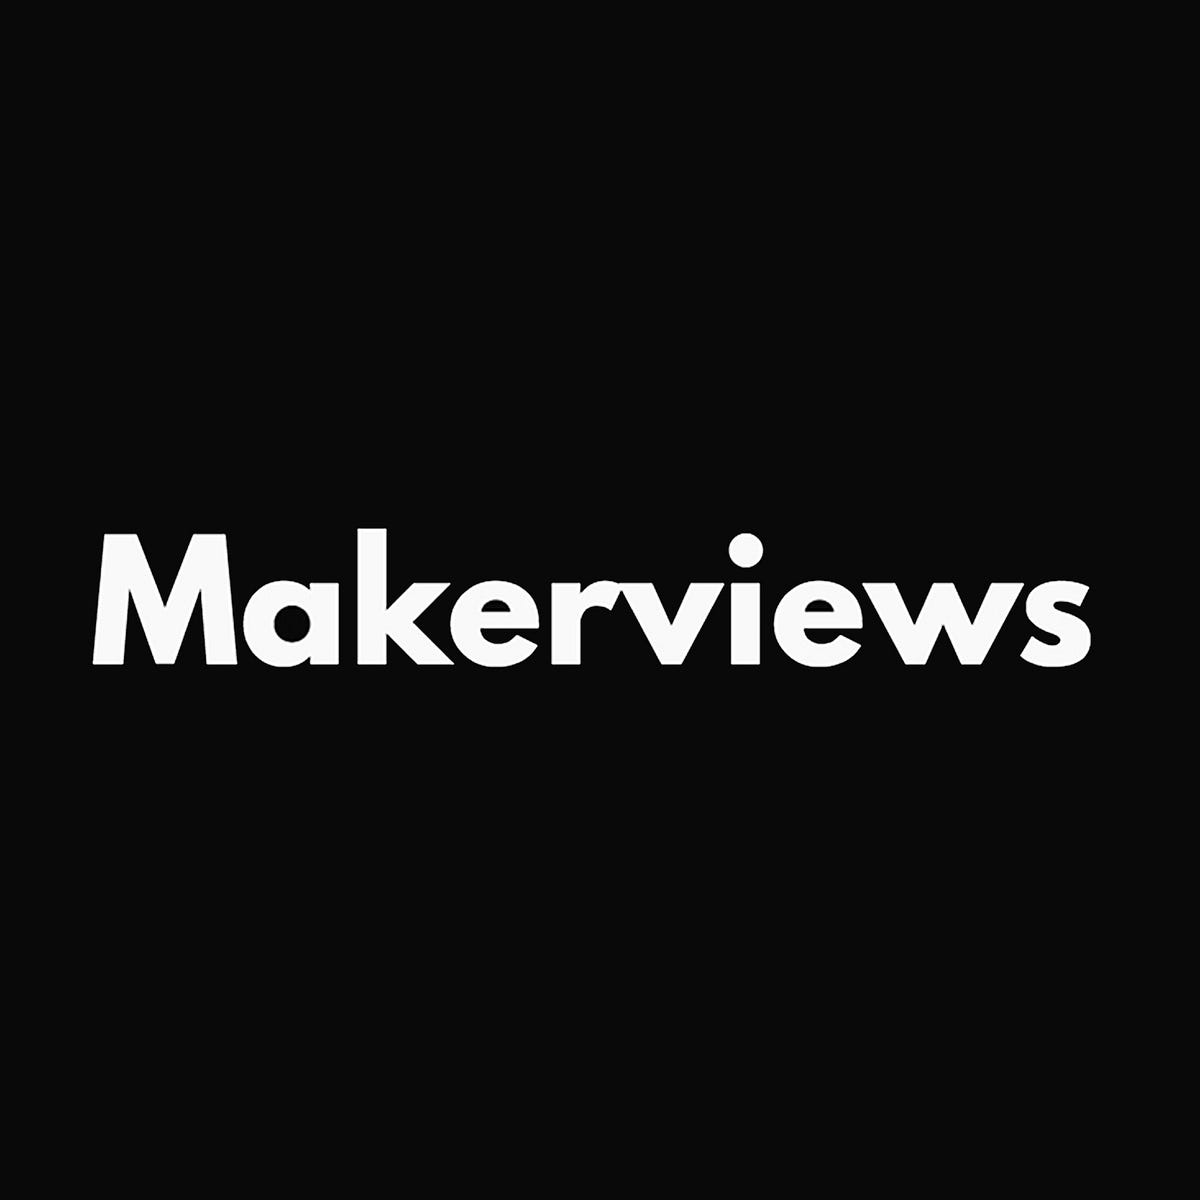 Makerviews—maker interviews publication—logo